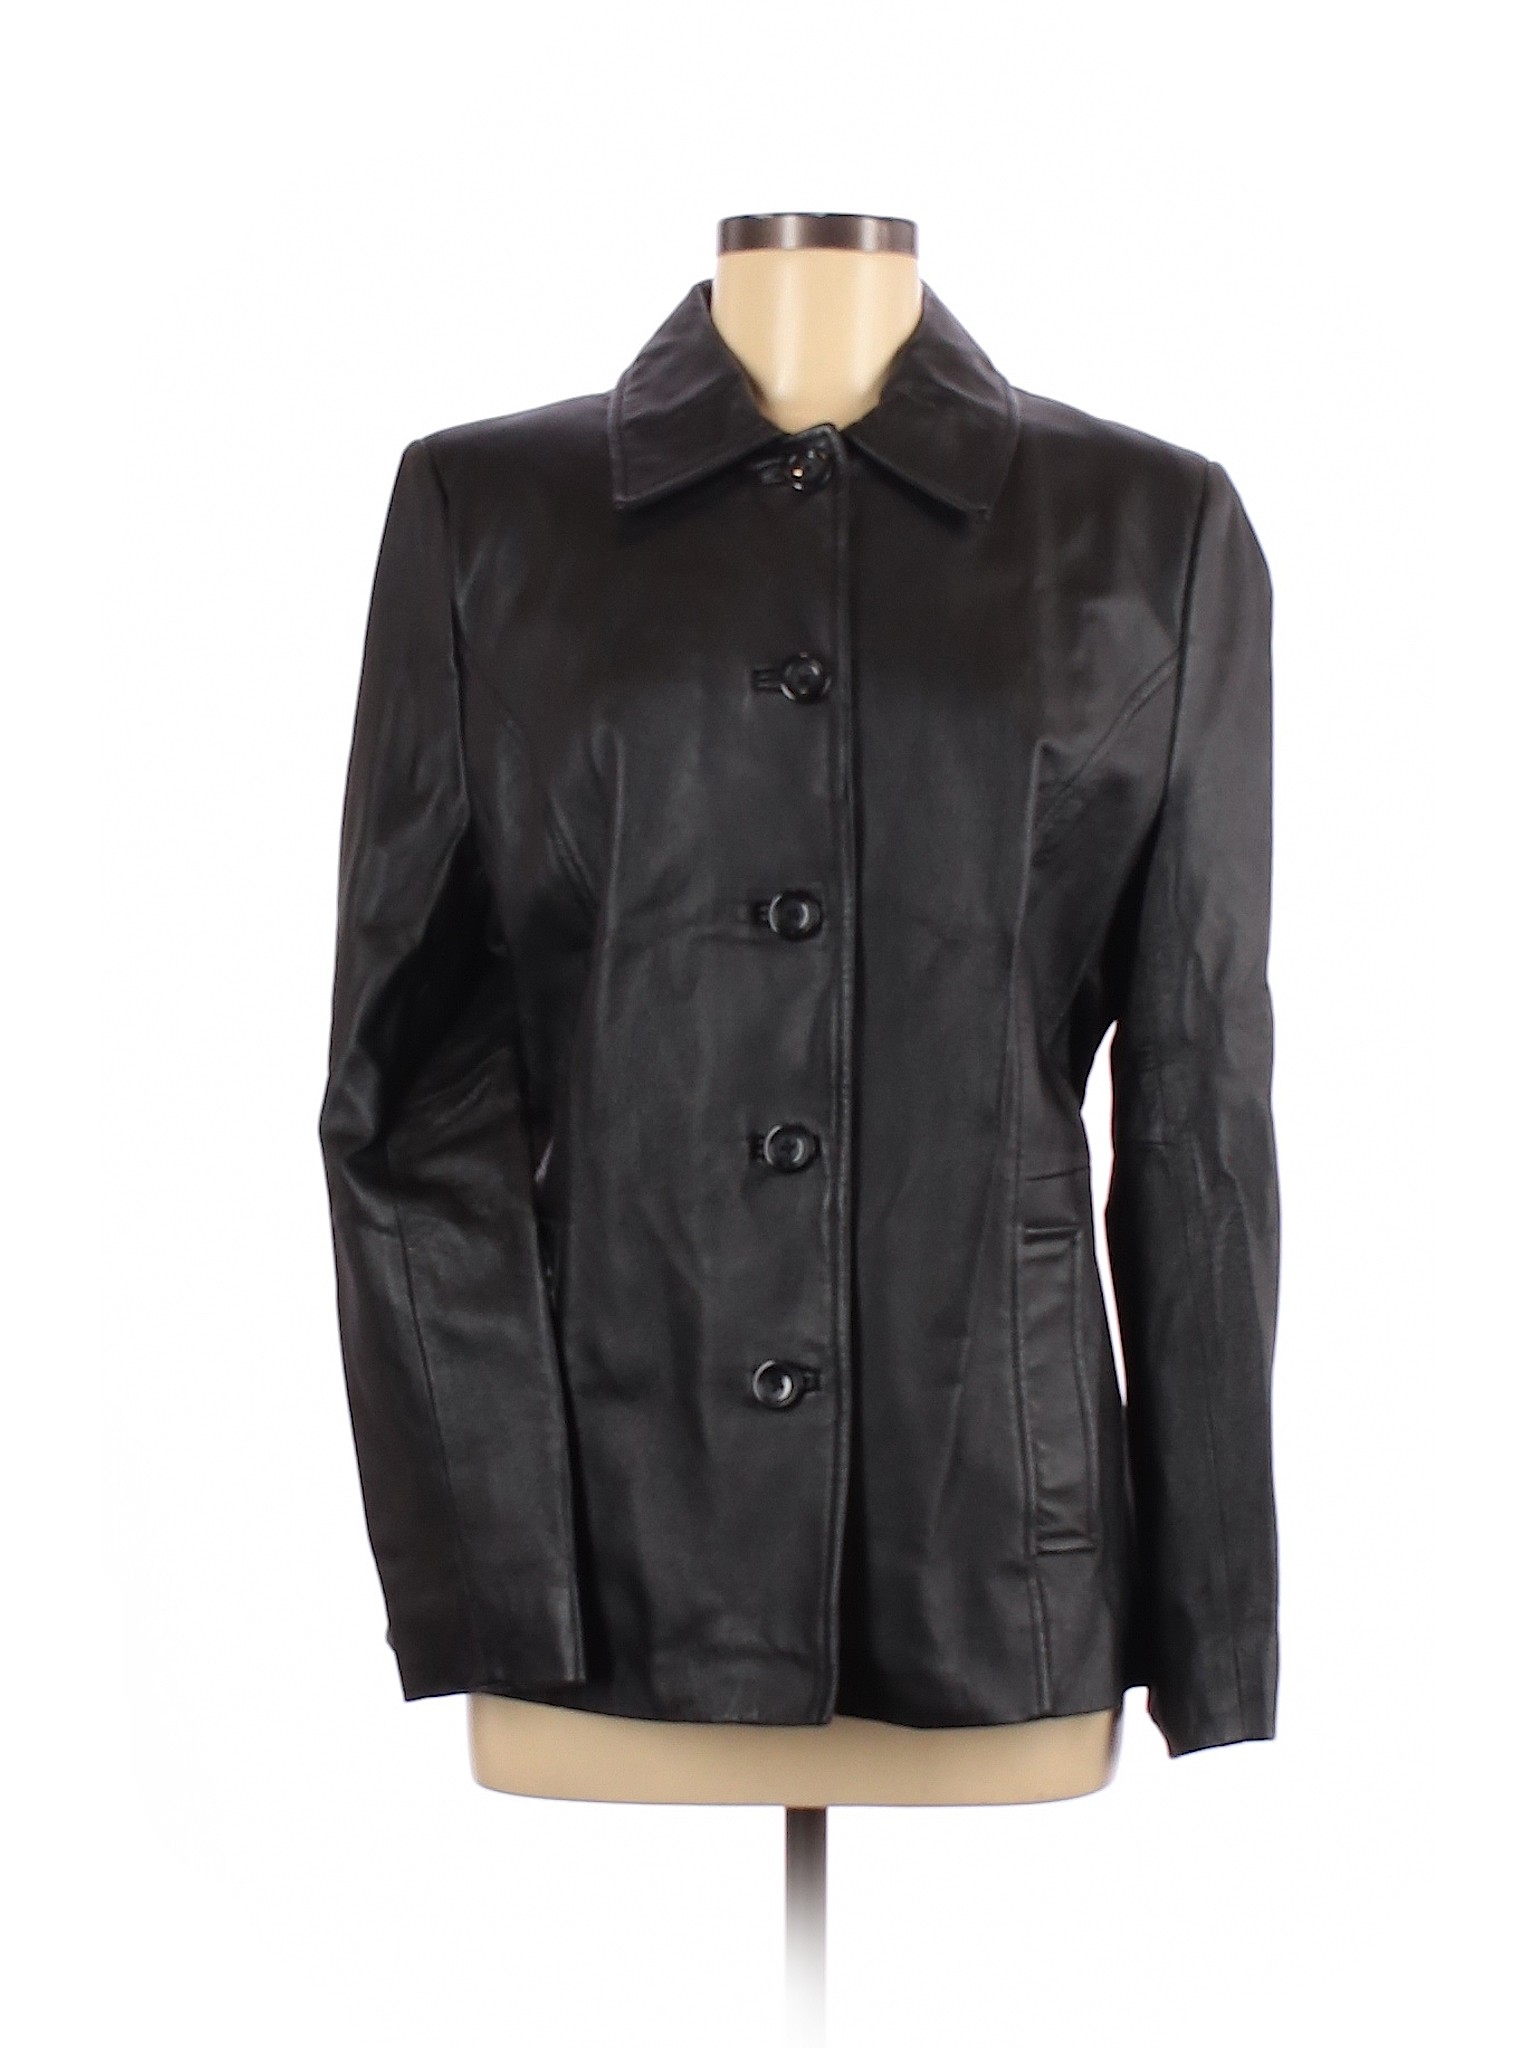 Croft & Barrow Women Black Leather Jacket M | eBay